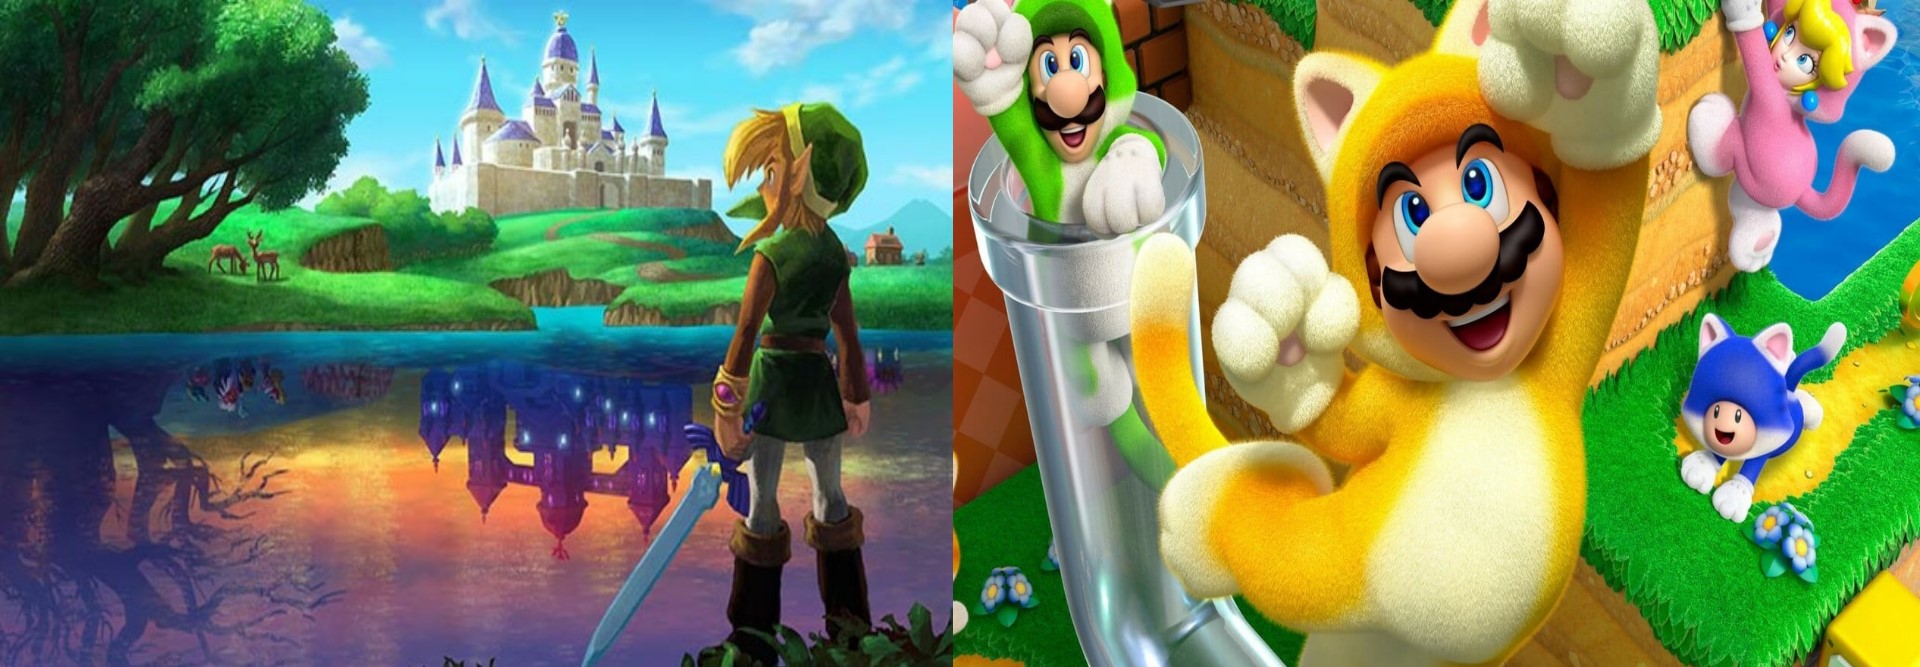 The Legend of Zelda: A Link Between World and Super Mario 3D World